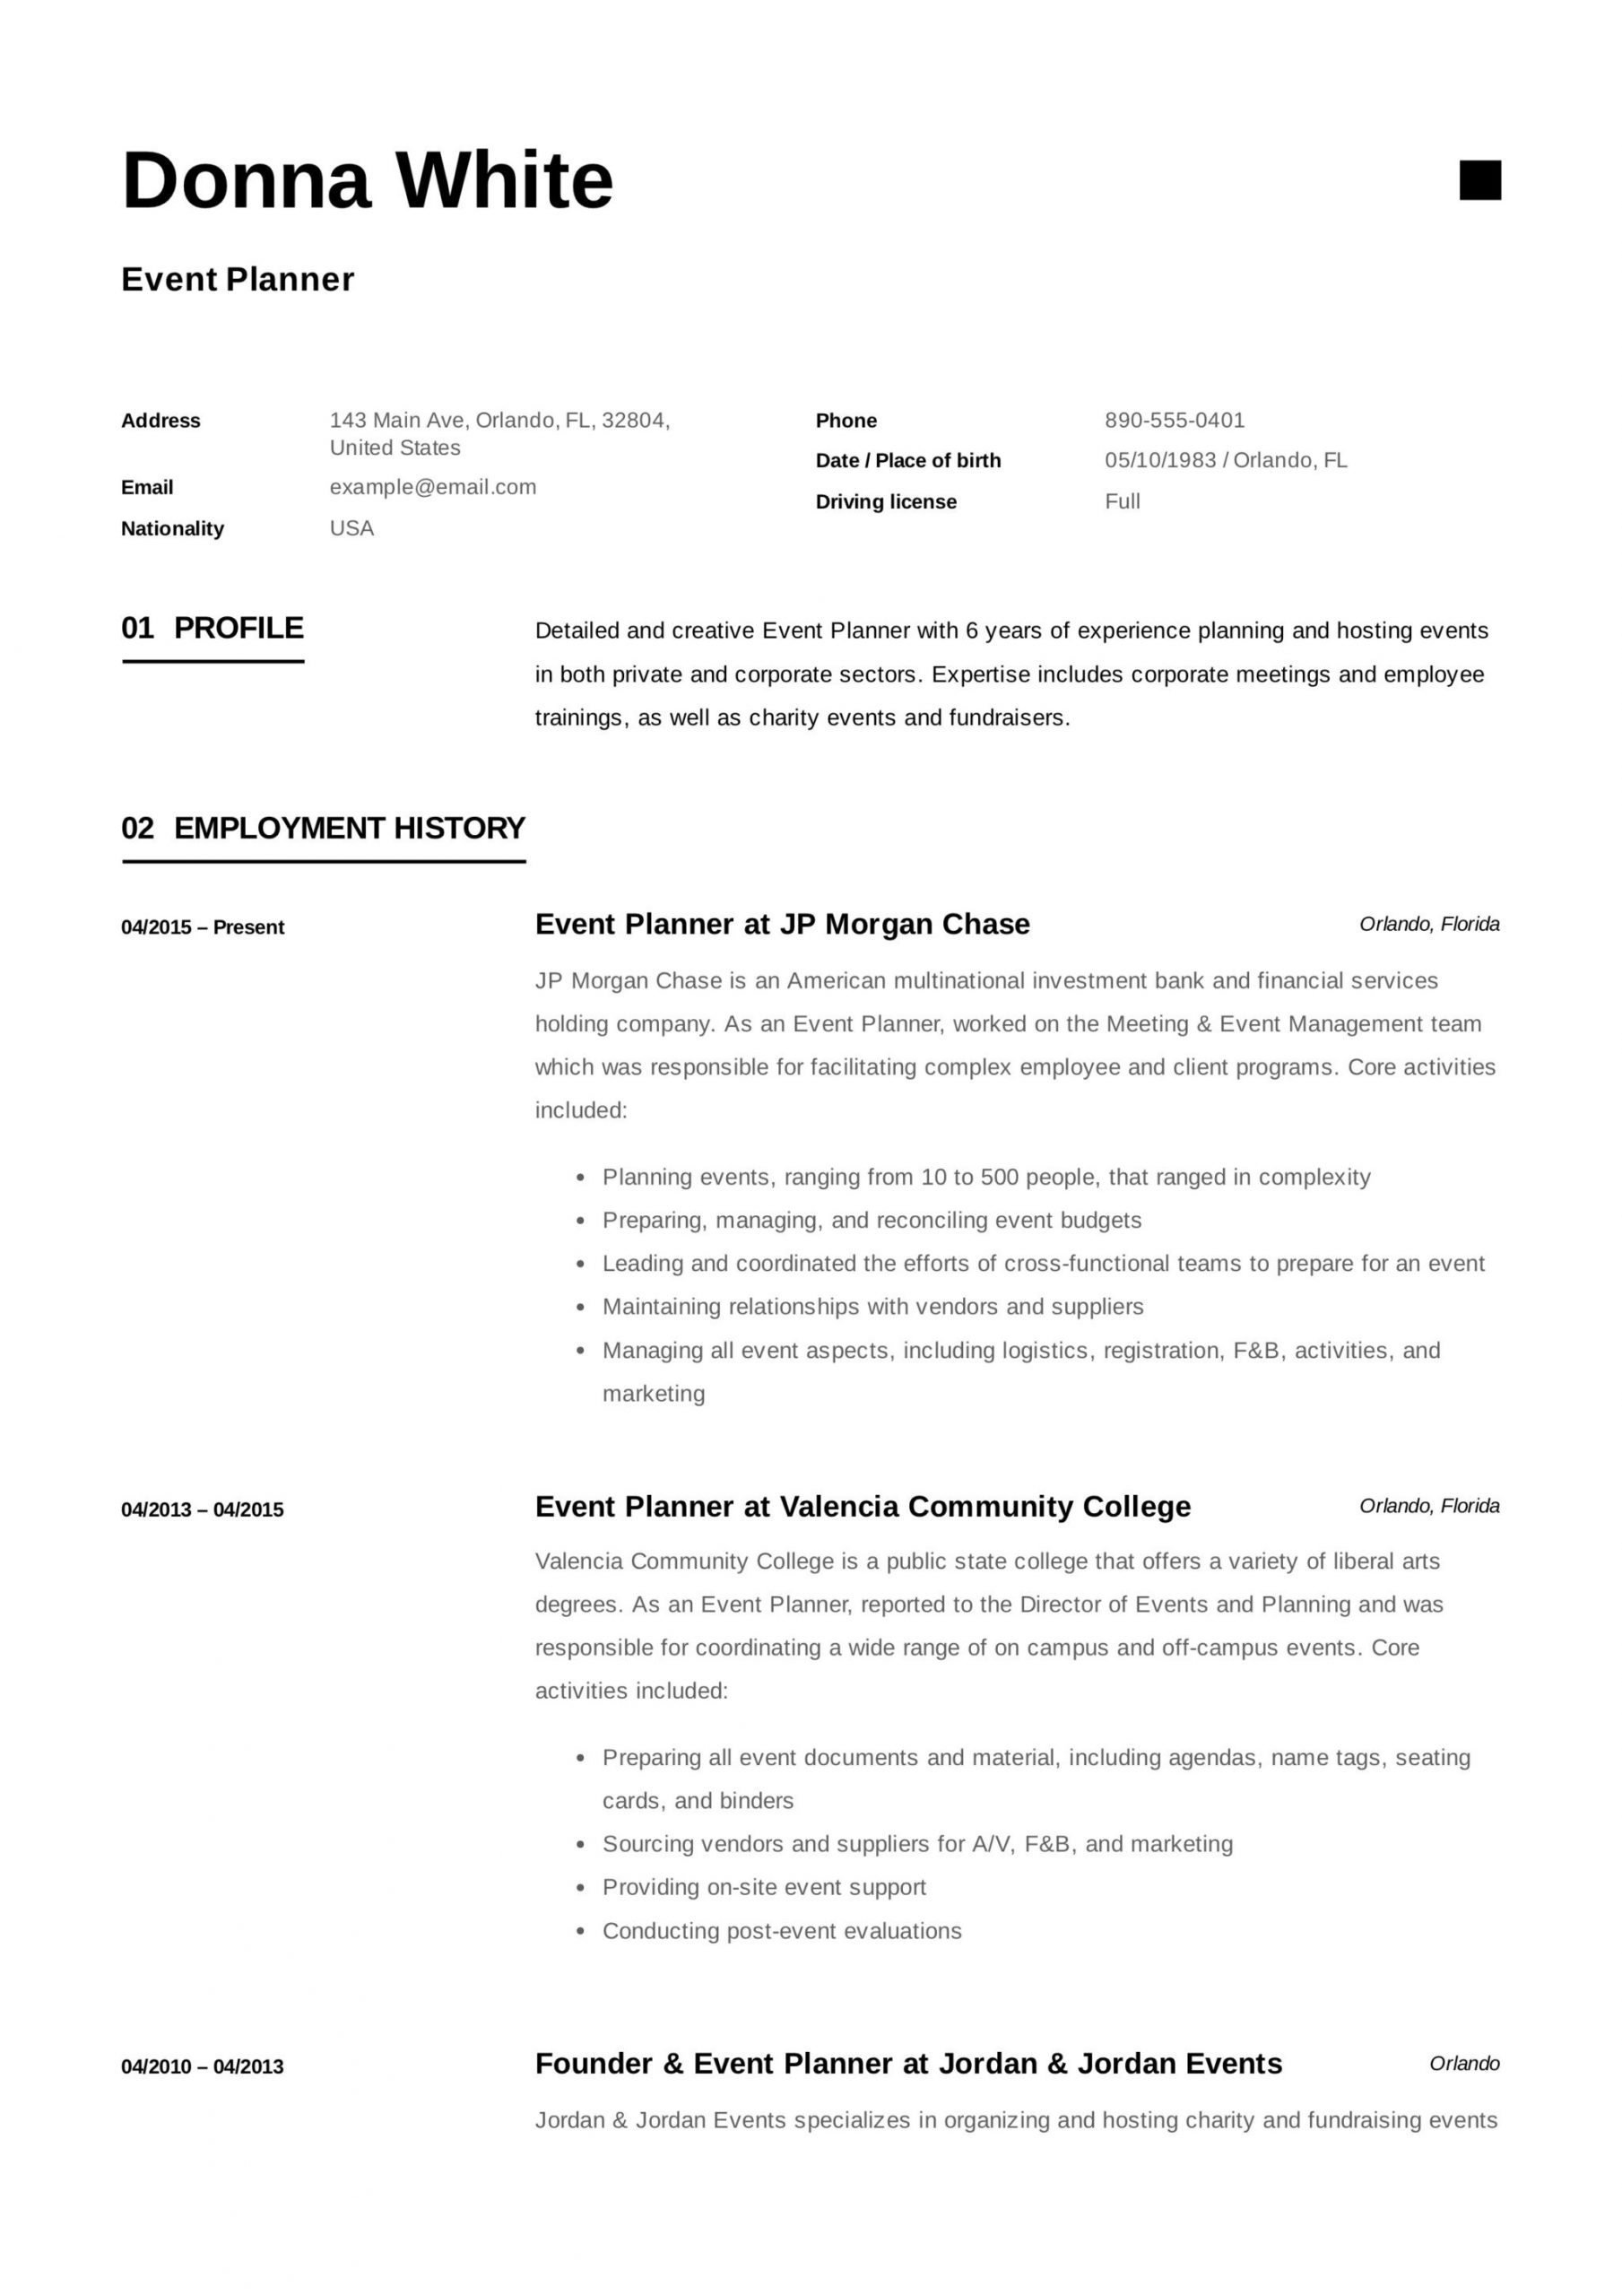 Resume Sample for event Management Company Guide: event Planner Resume   12 Samples Pdf & Word 2020